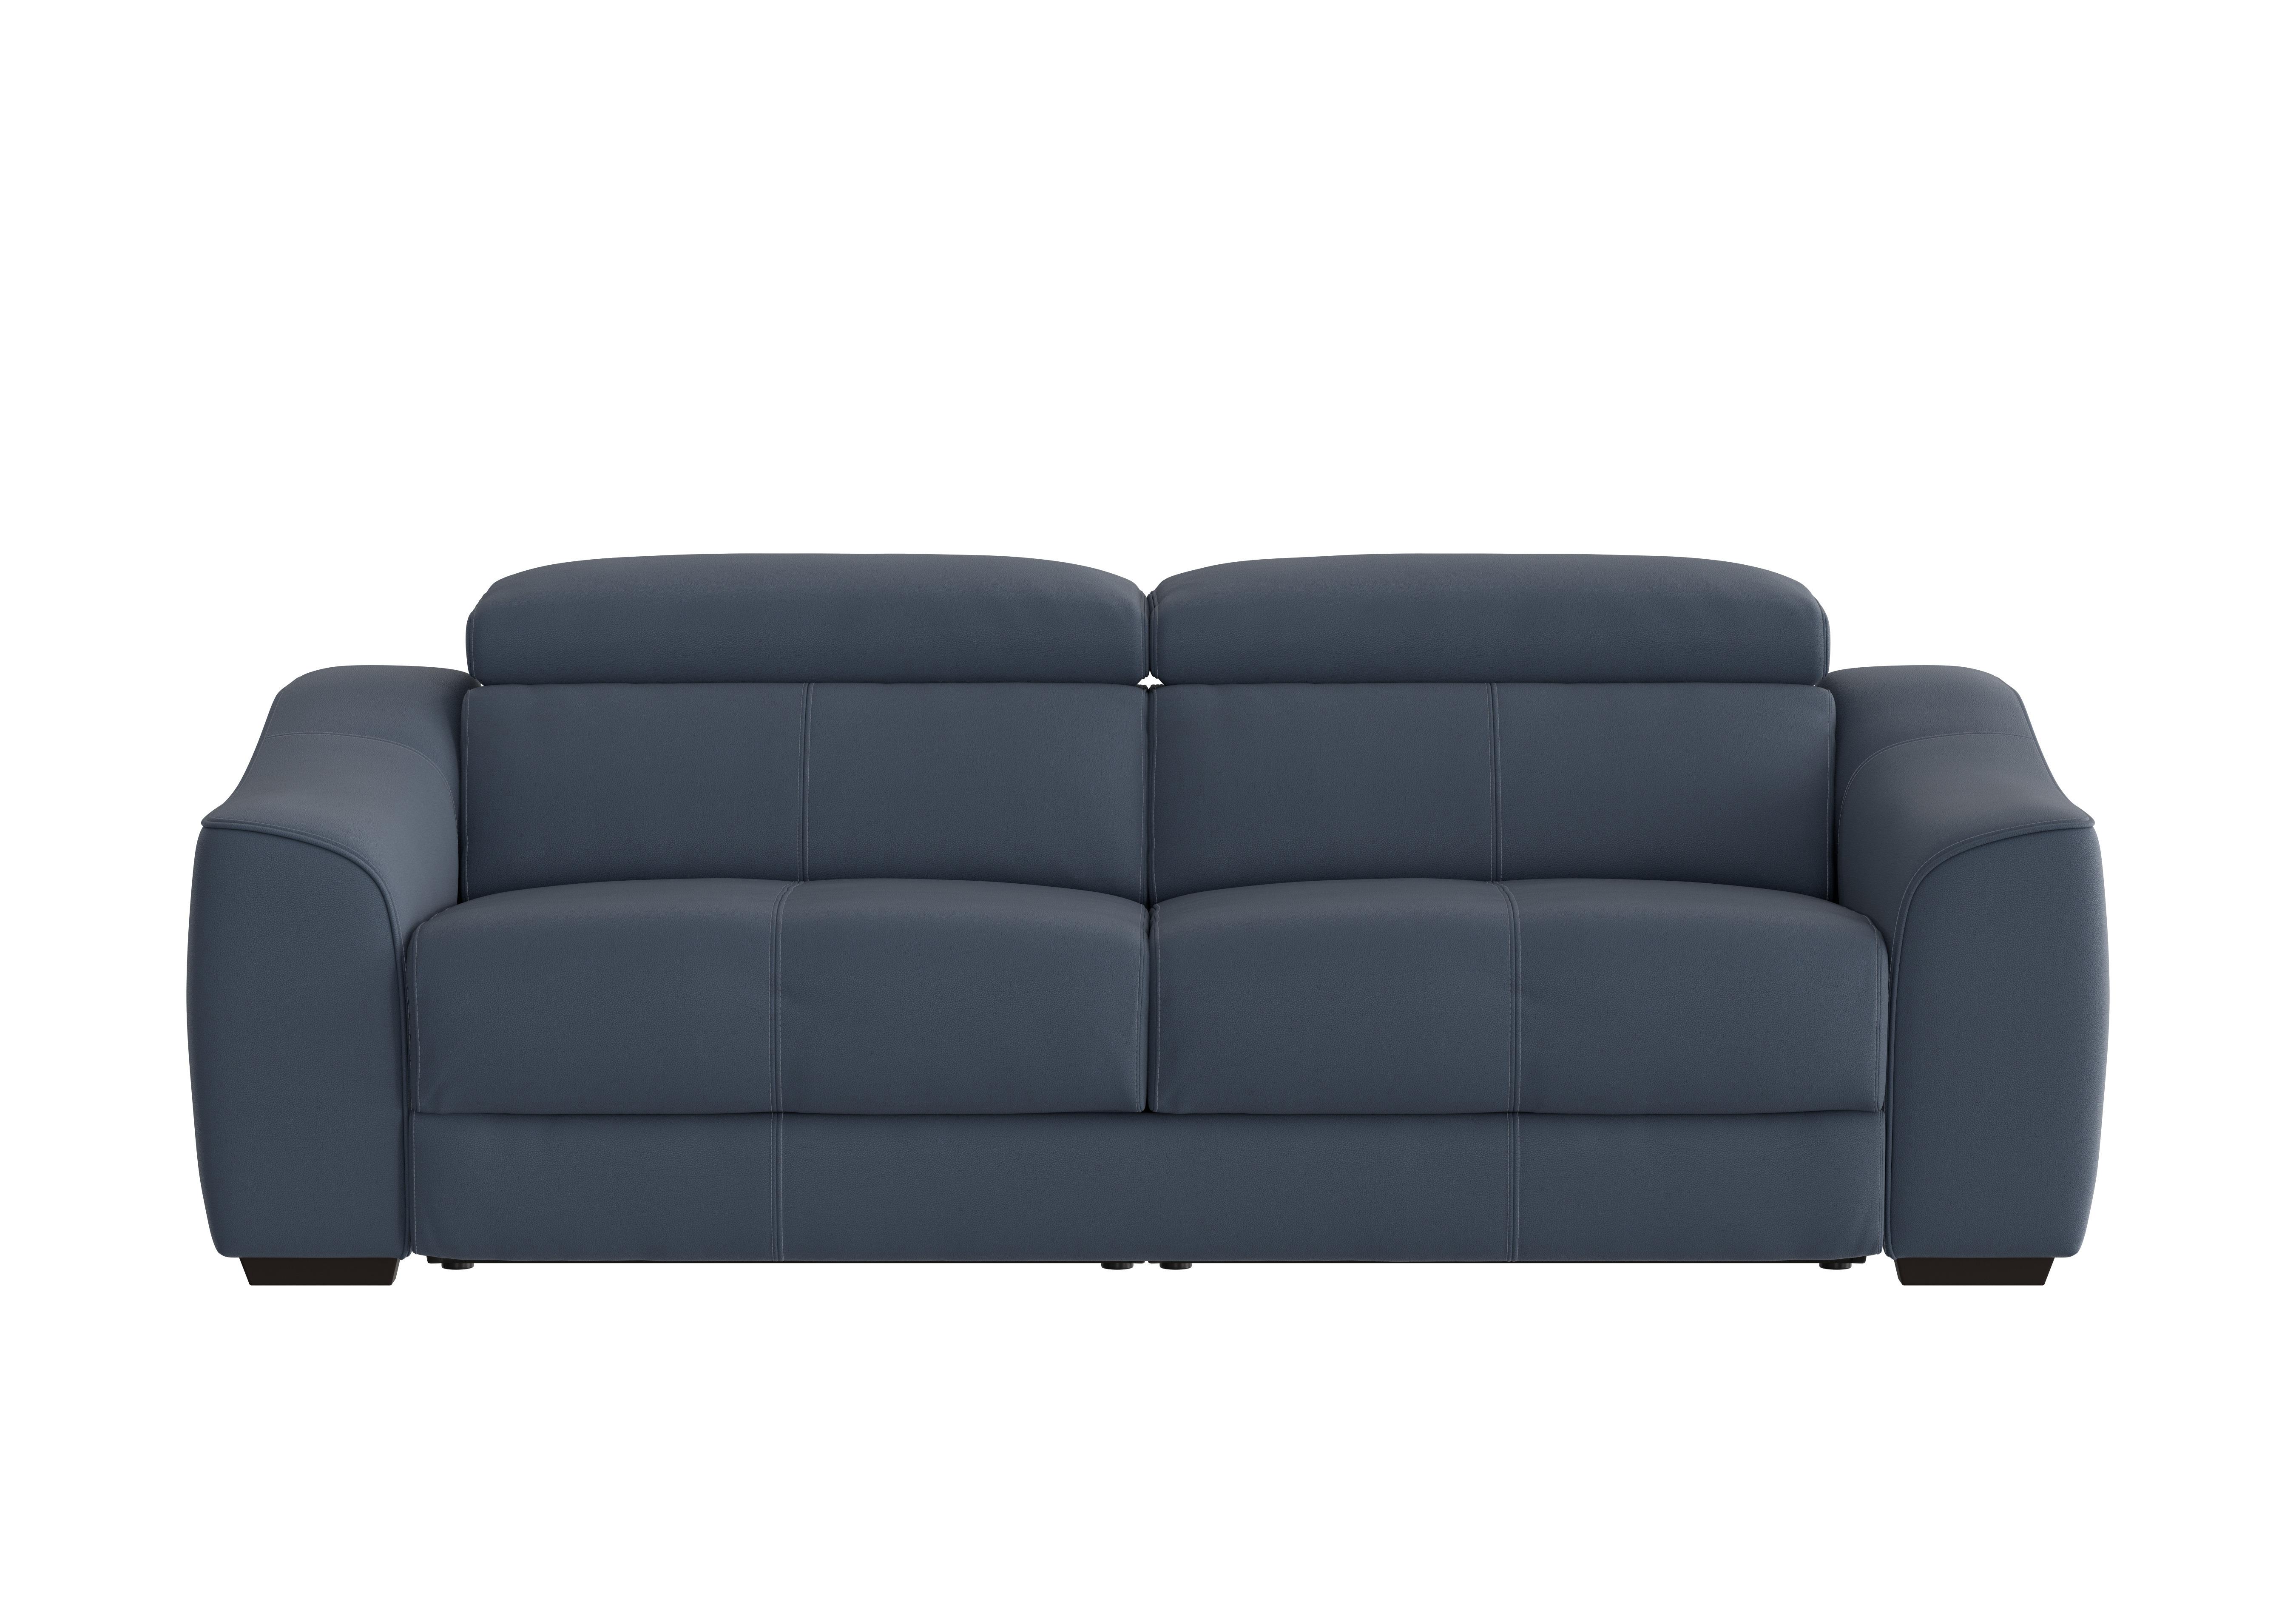 Elixir 3 Seater Leather Sofa in Bv-313e Ocean Blue on Furniture Village